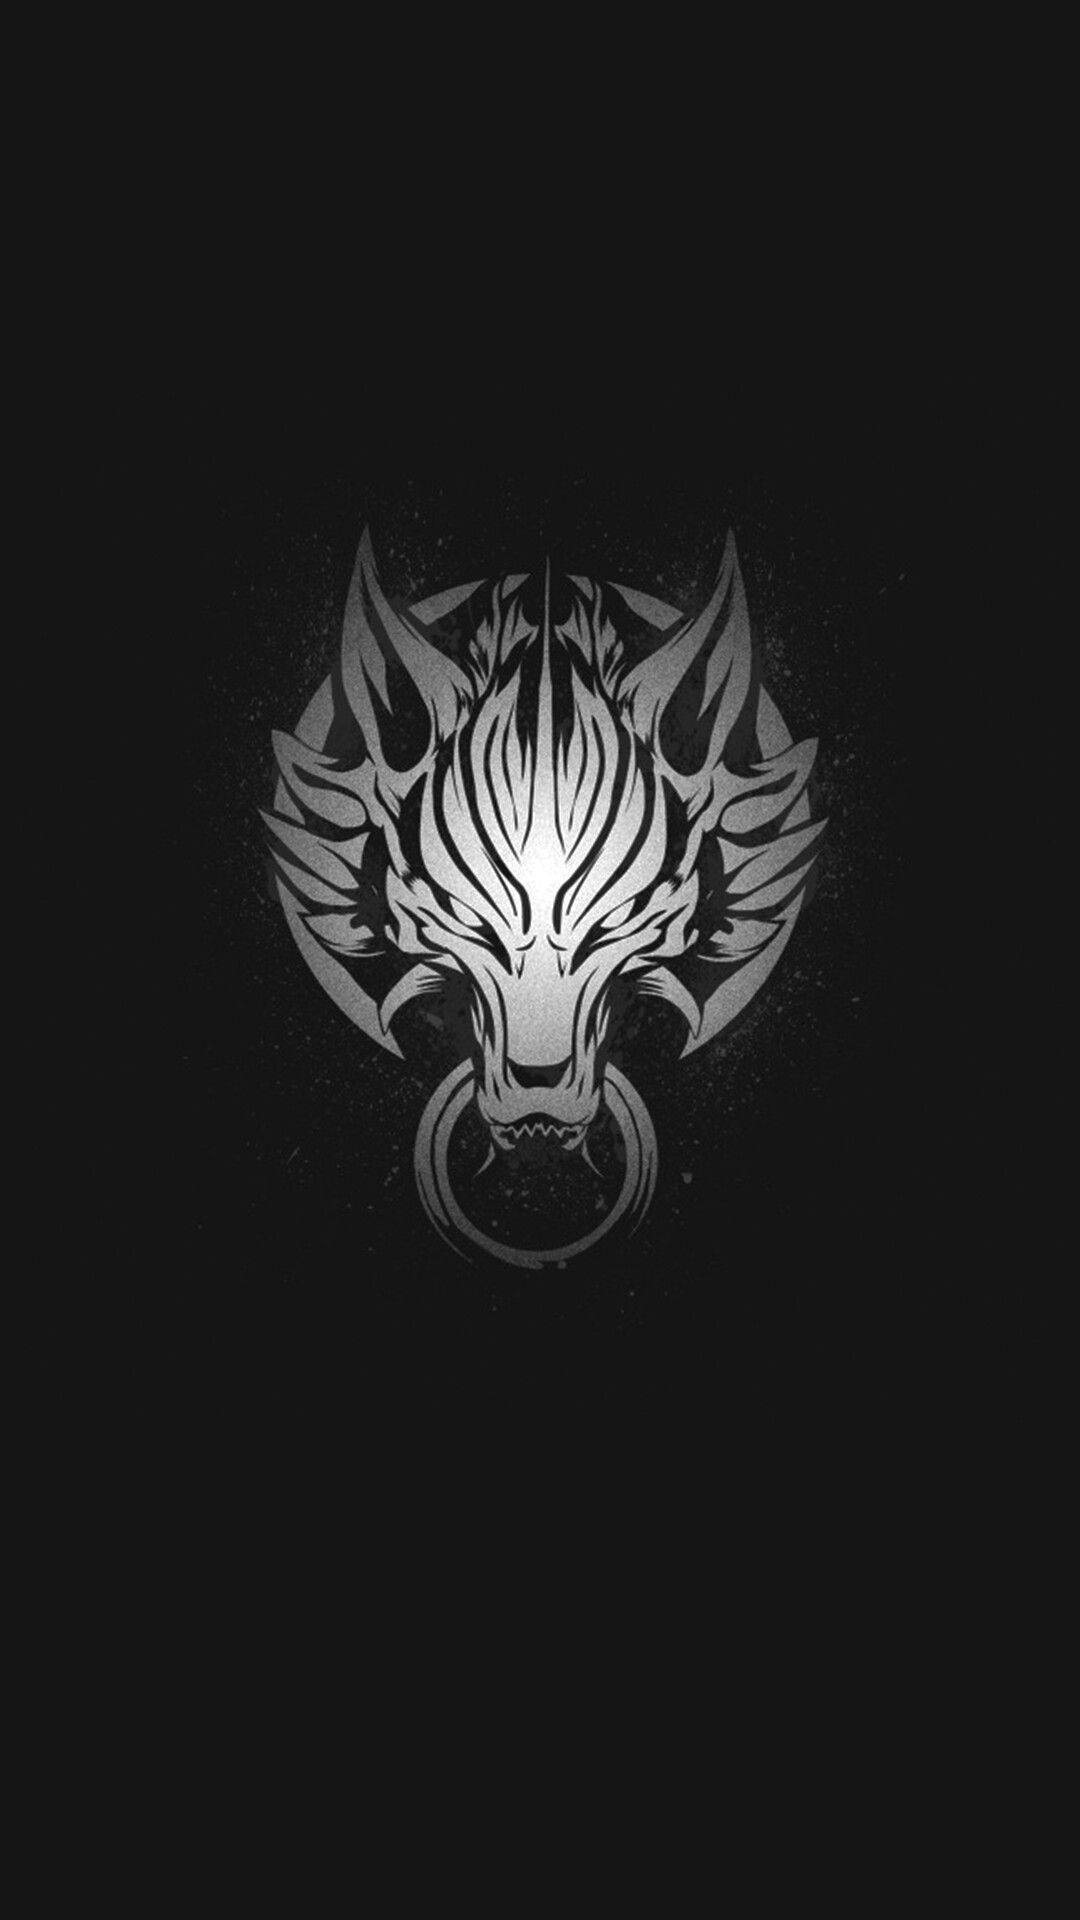 Final Fantasy Logo Wallpaper Mobile. Fantasy logo, Final fantasy logo, Wolf tattoos